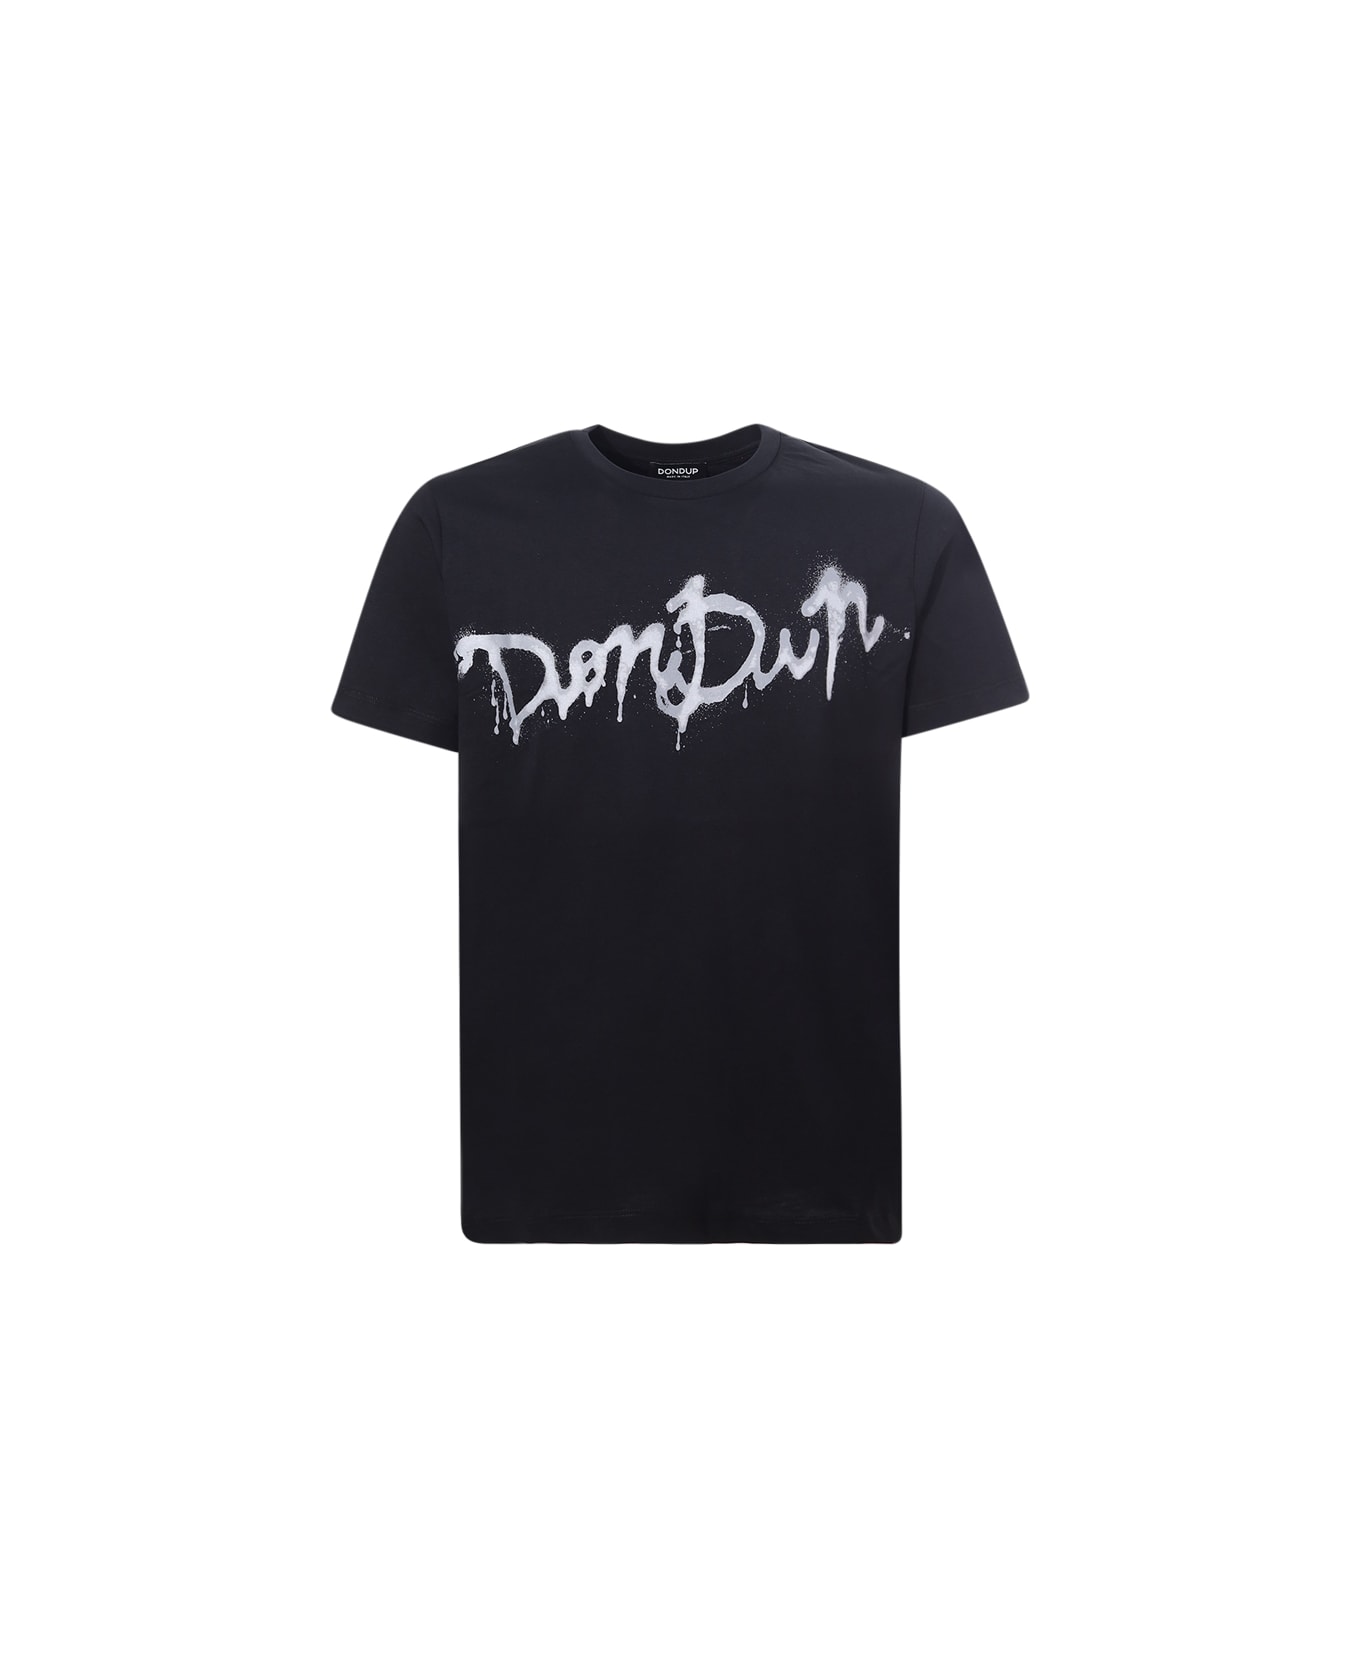 Dondup T-shirt Dondup - Black